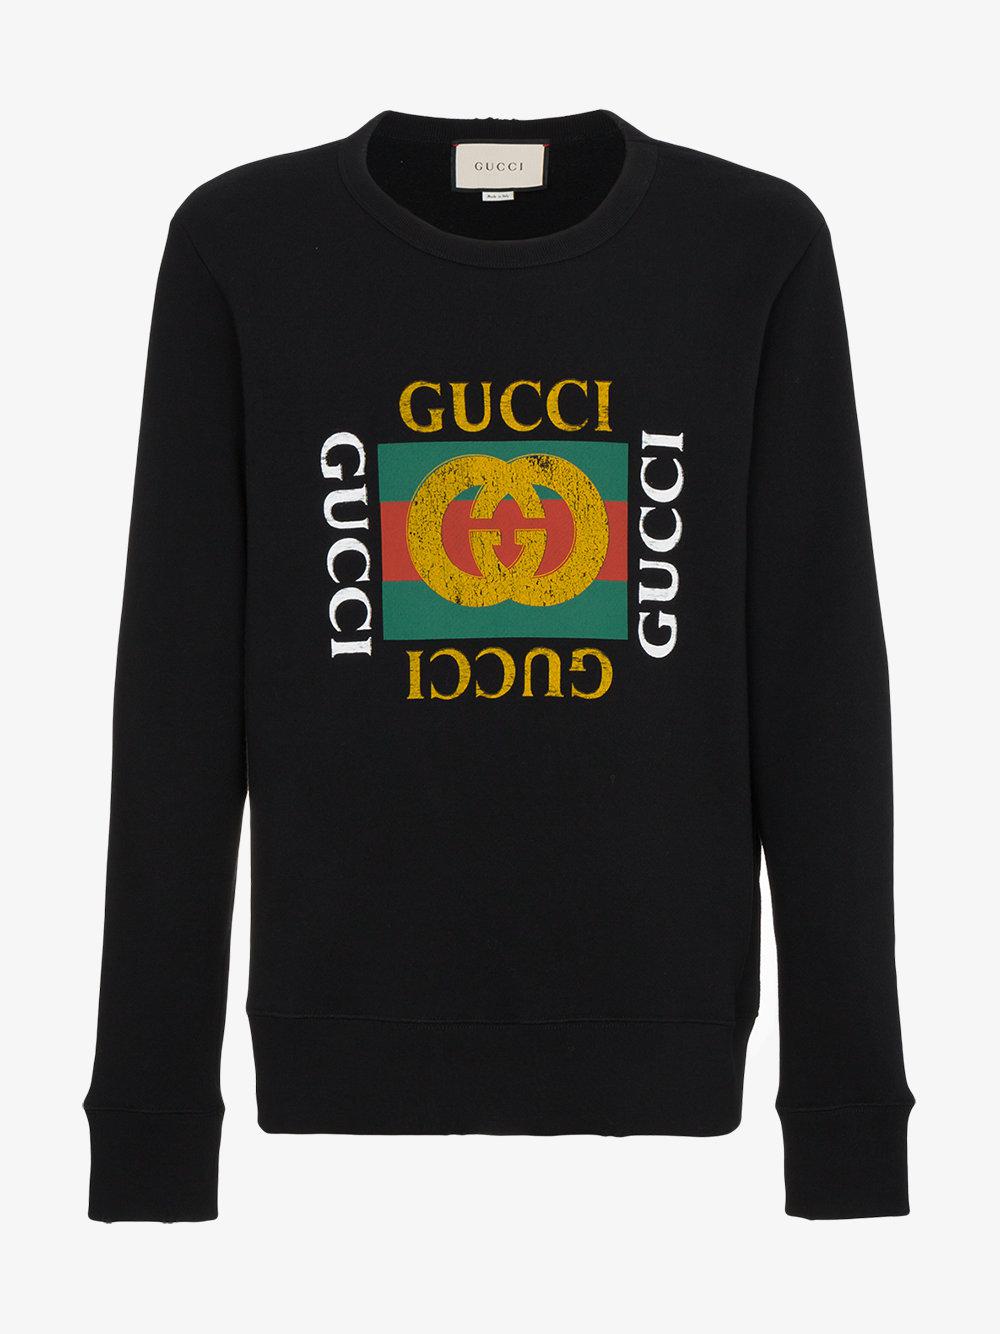 Gucci Cotton Gg Fake Sweatshirt in Black for Men - Lyst